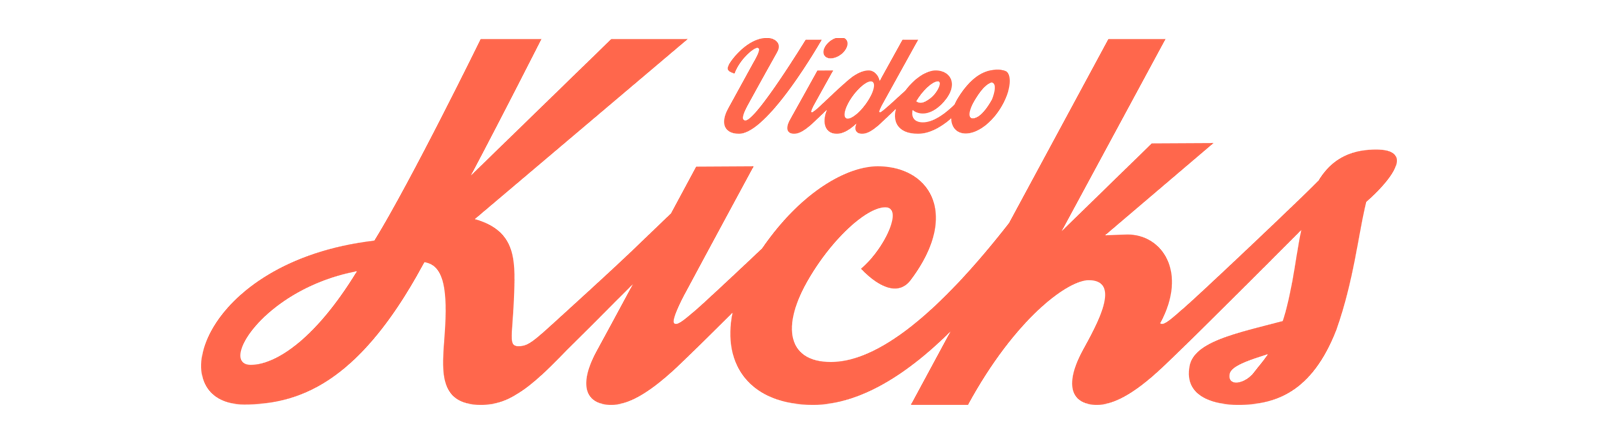 Video Kicks